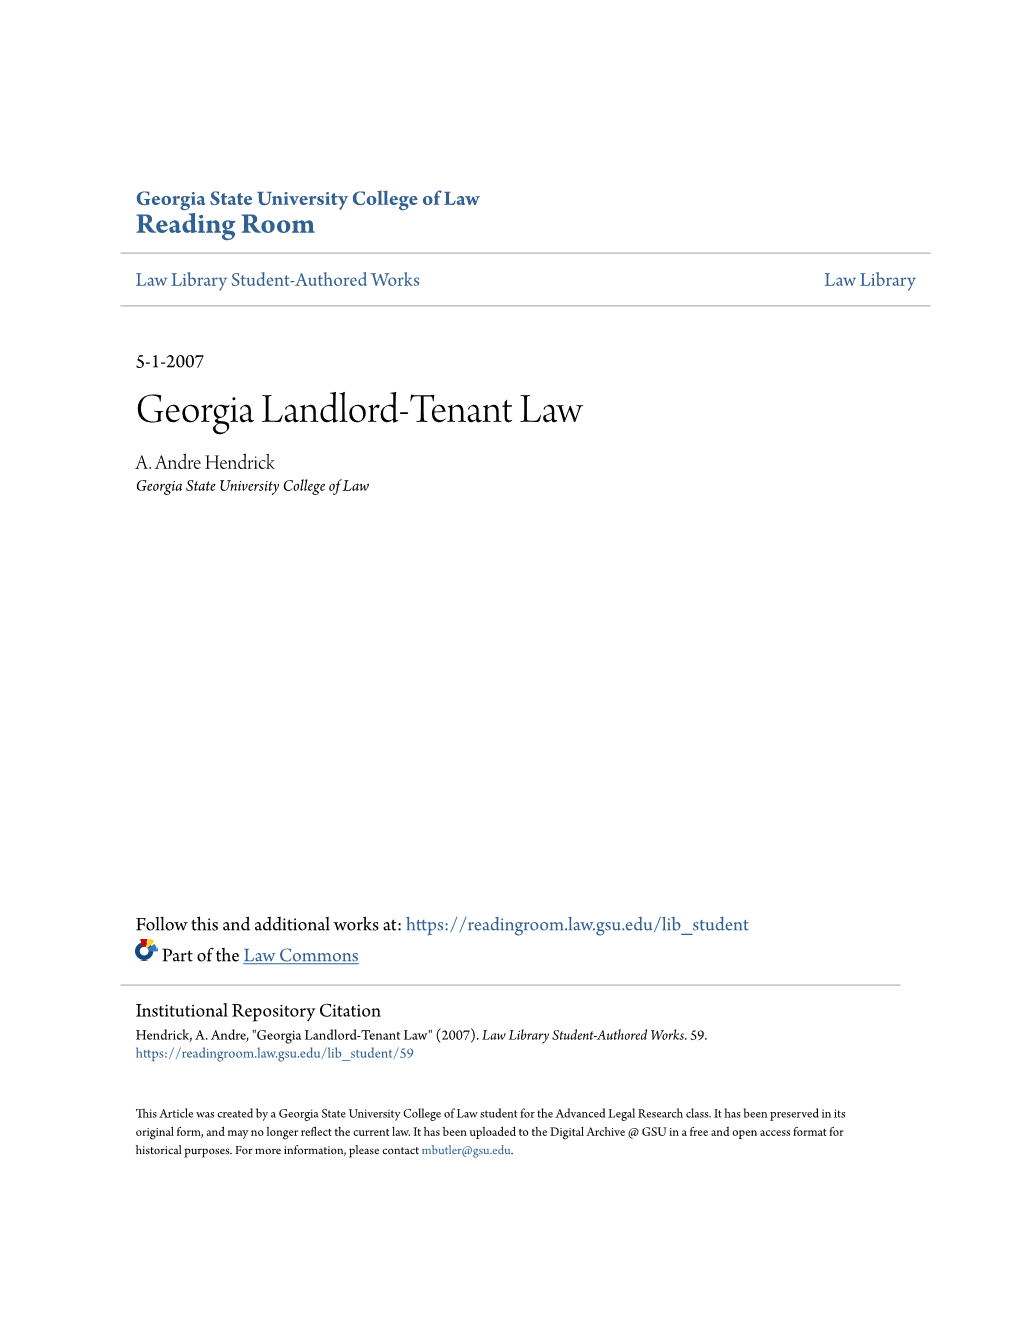 Georgia Landlord-Tenant Law A